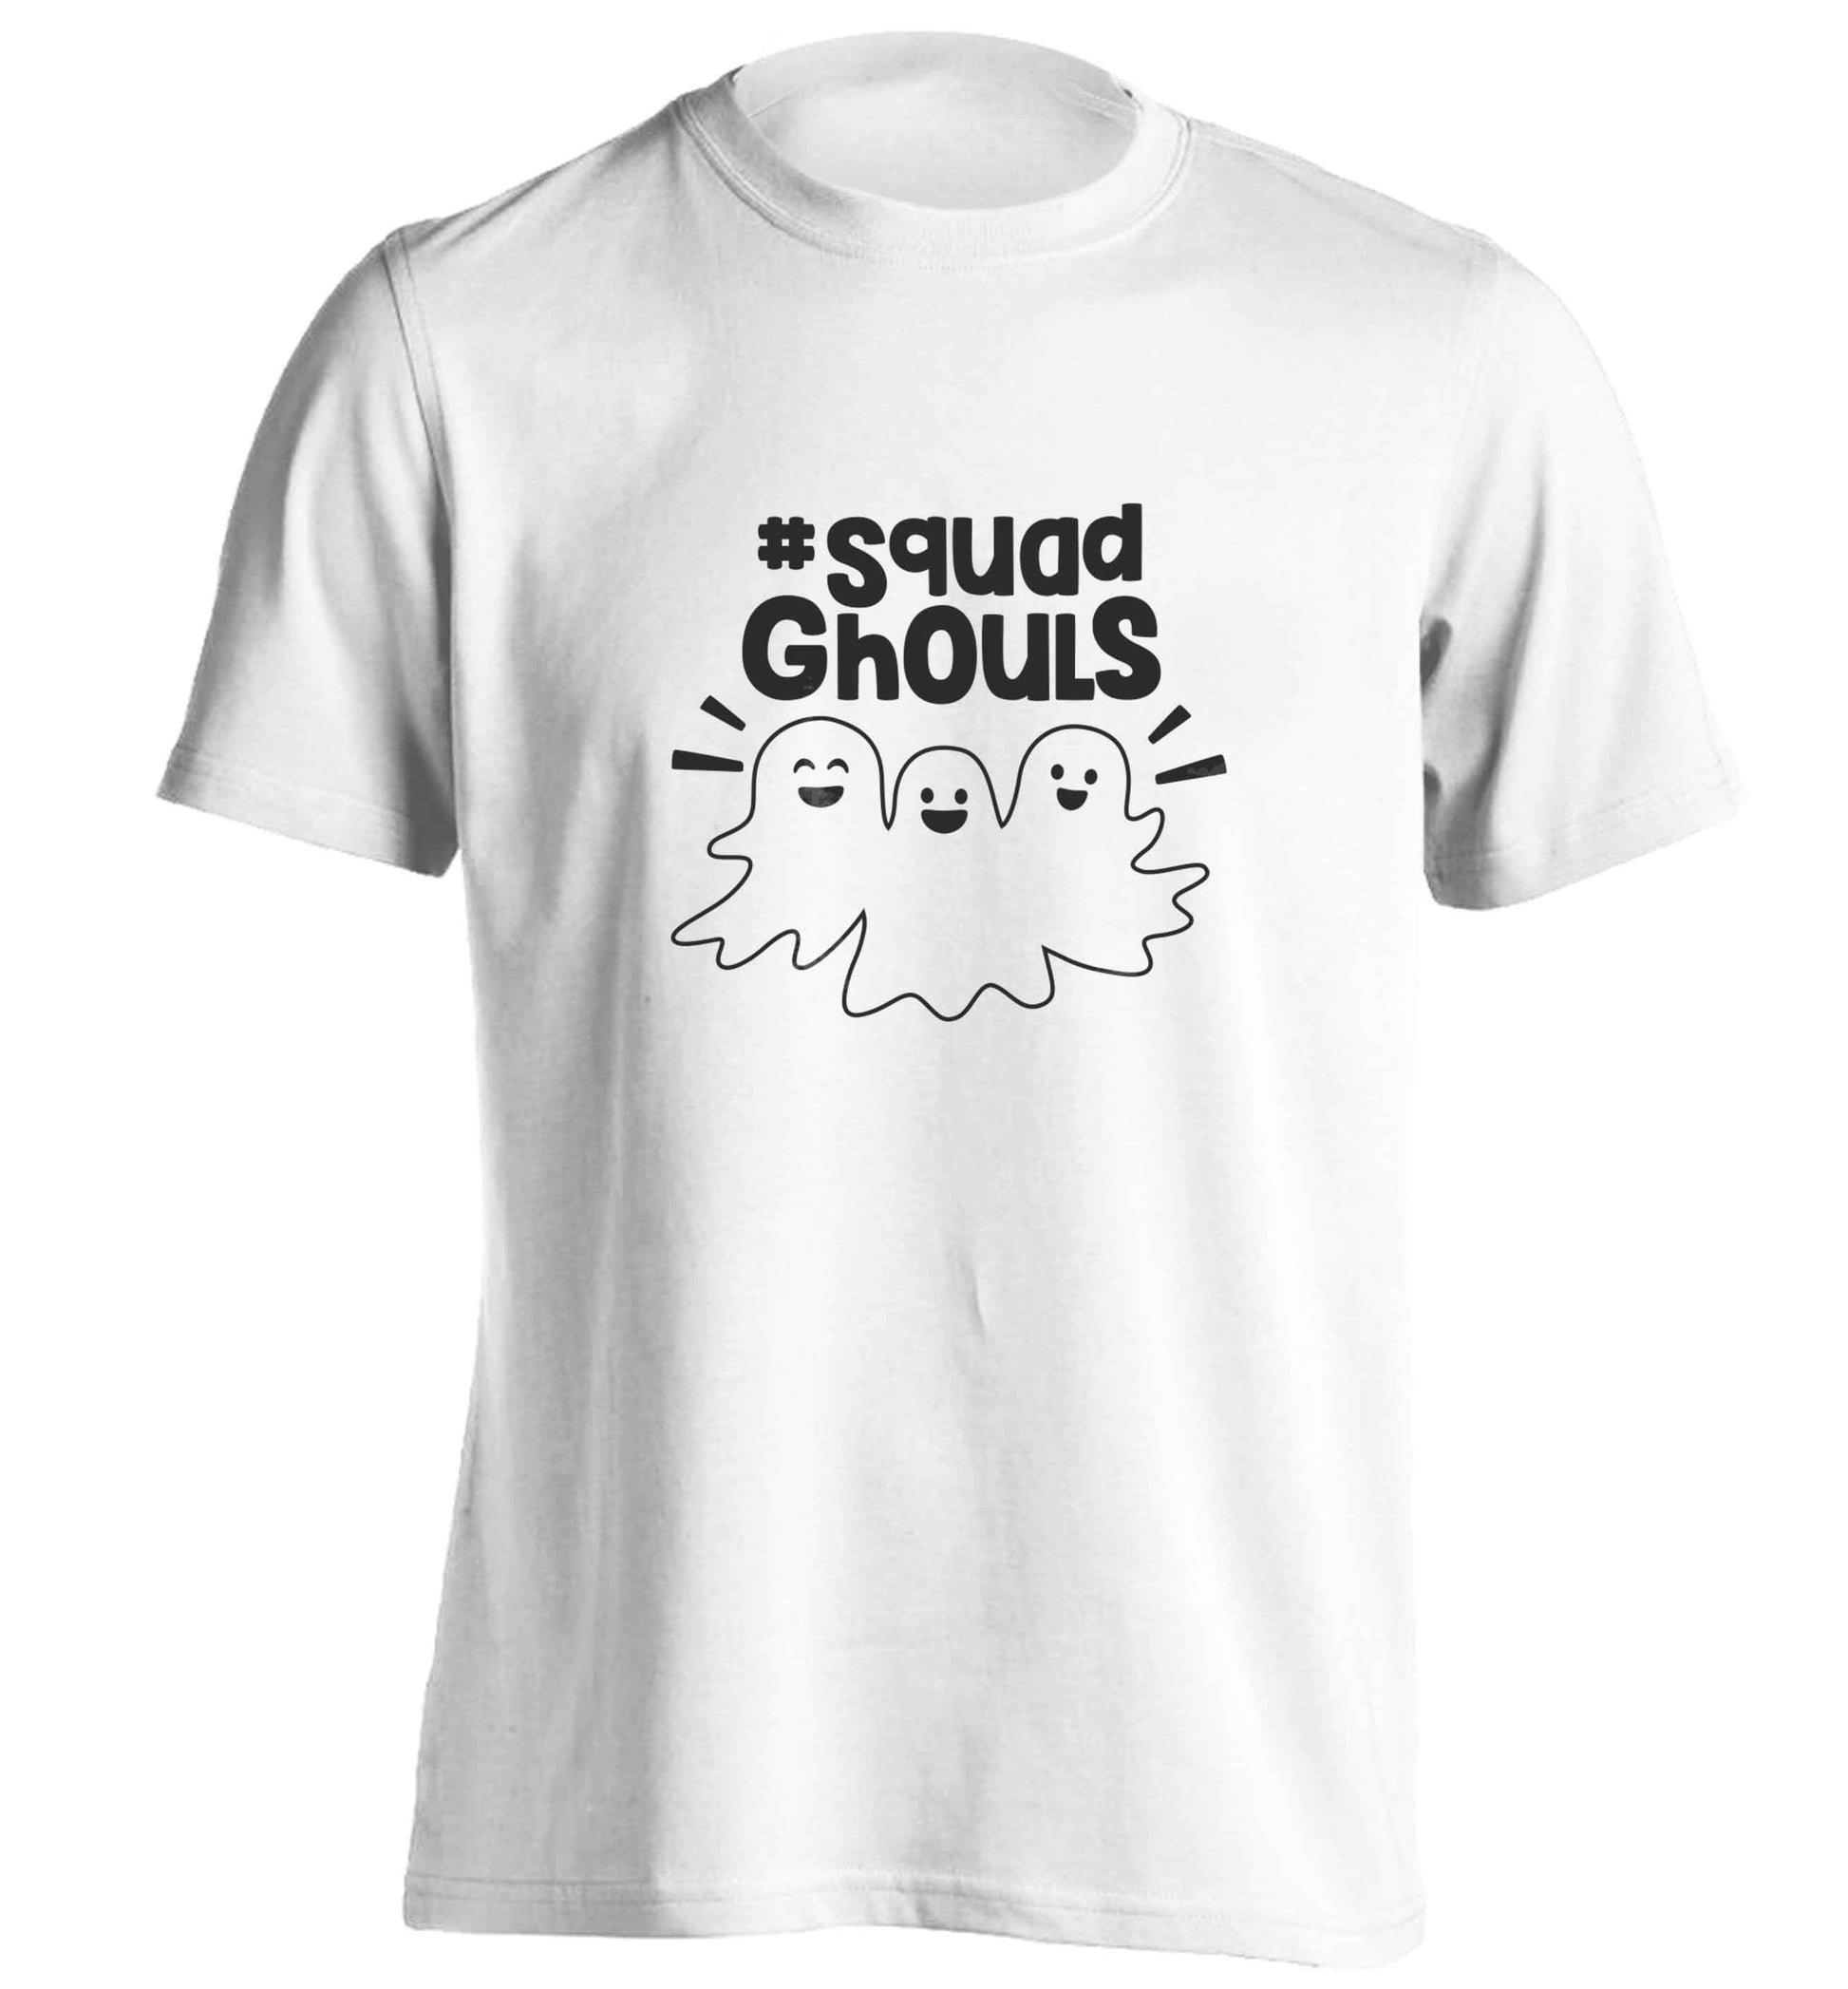 Squad ghouls Kit adults unisex white Tshirt 2XL